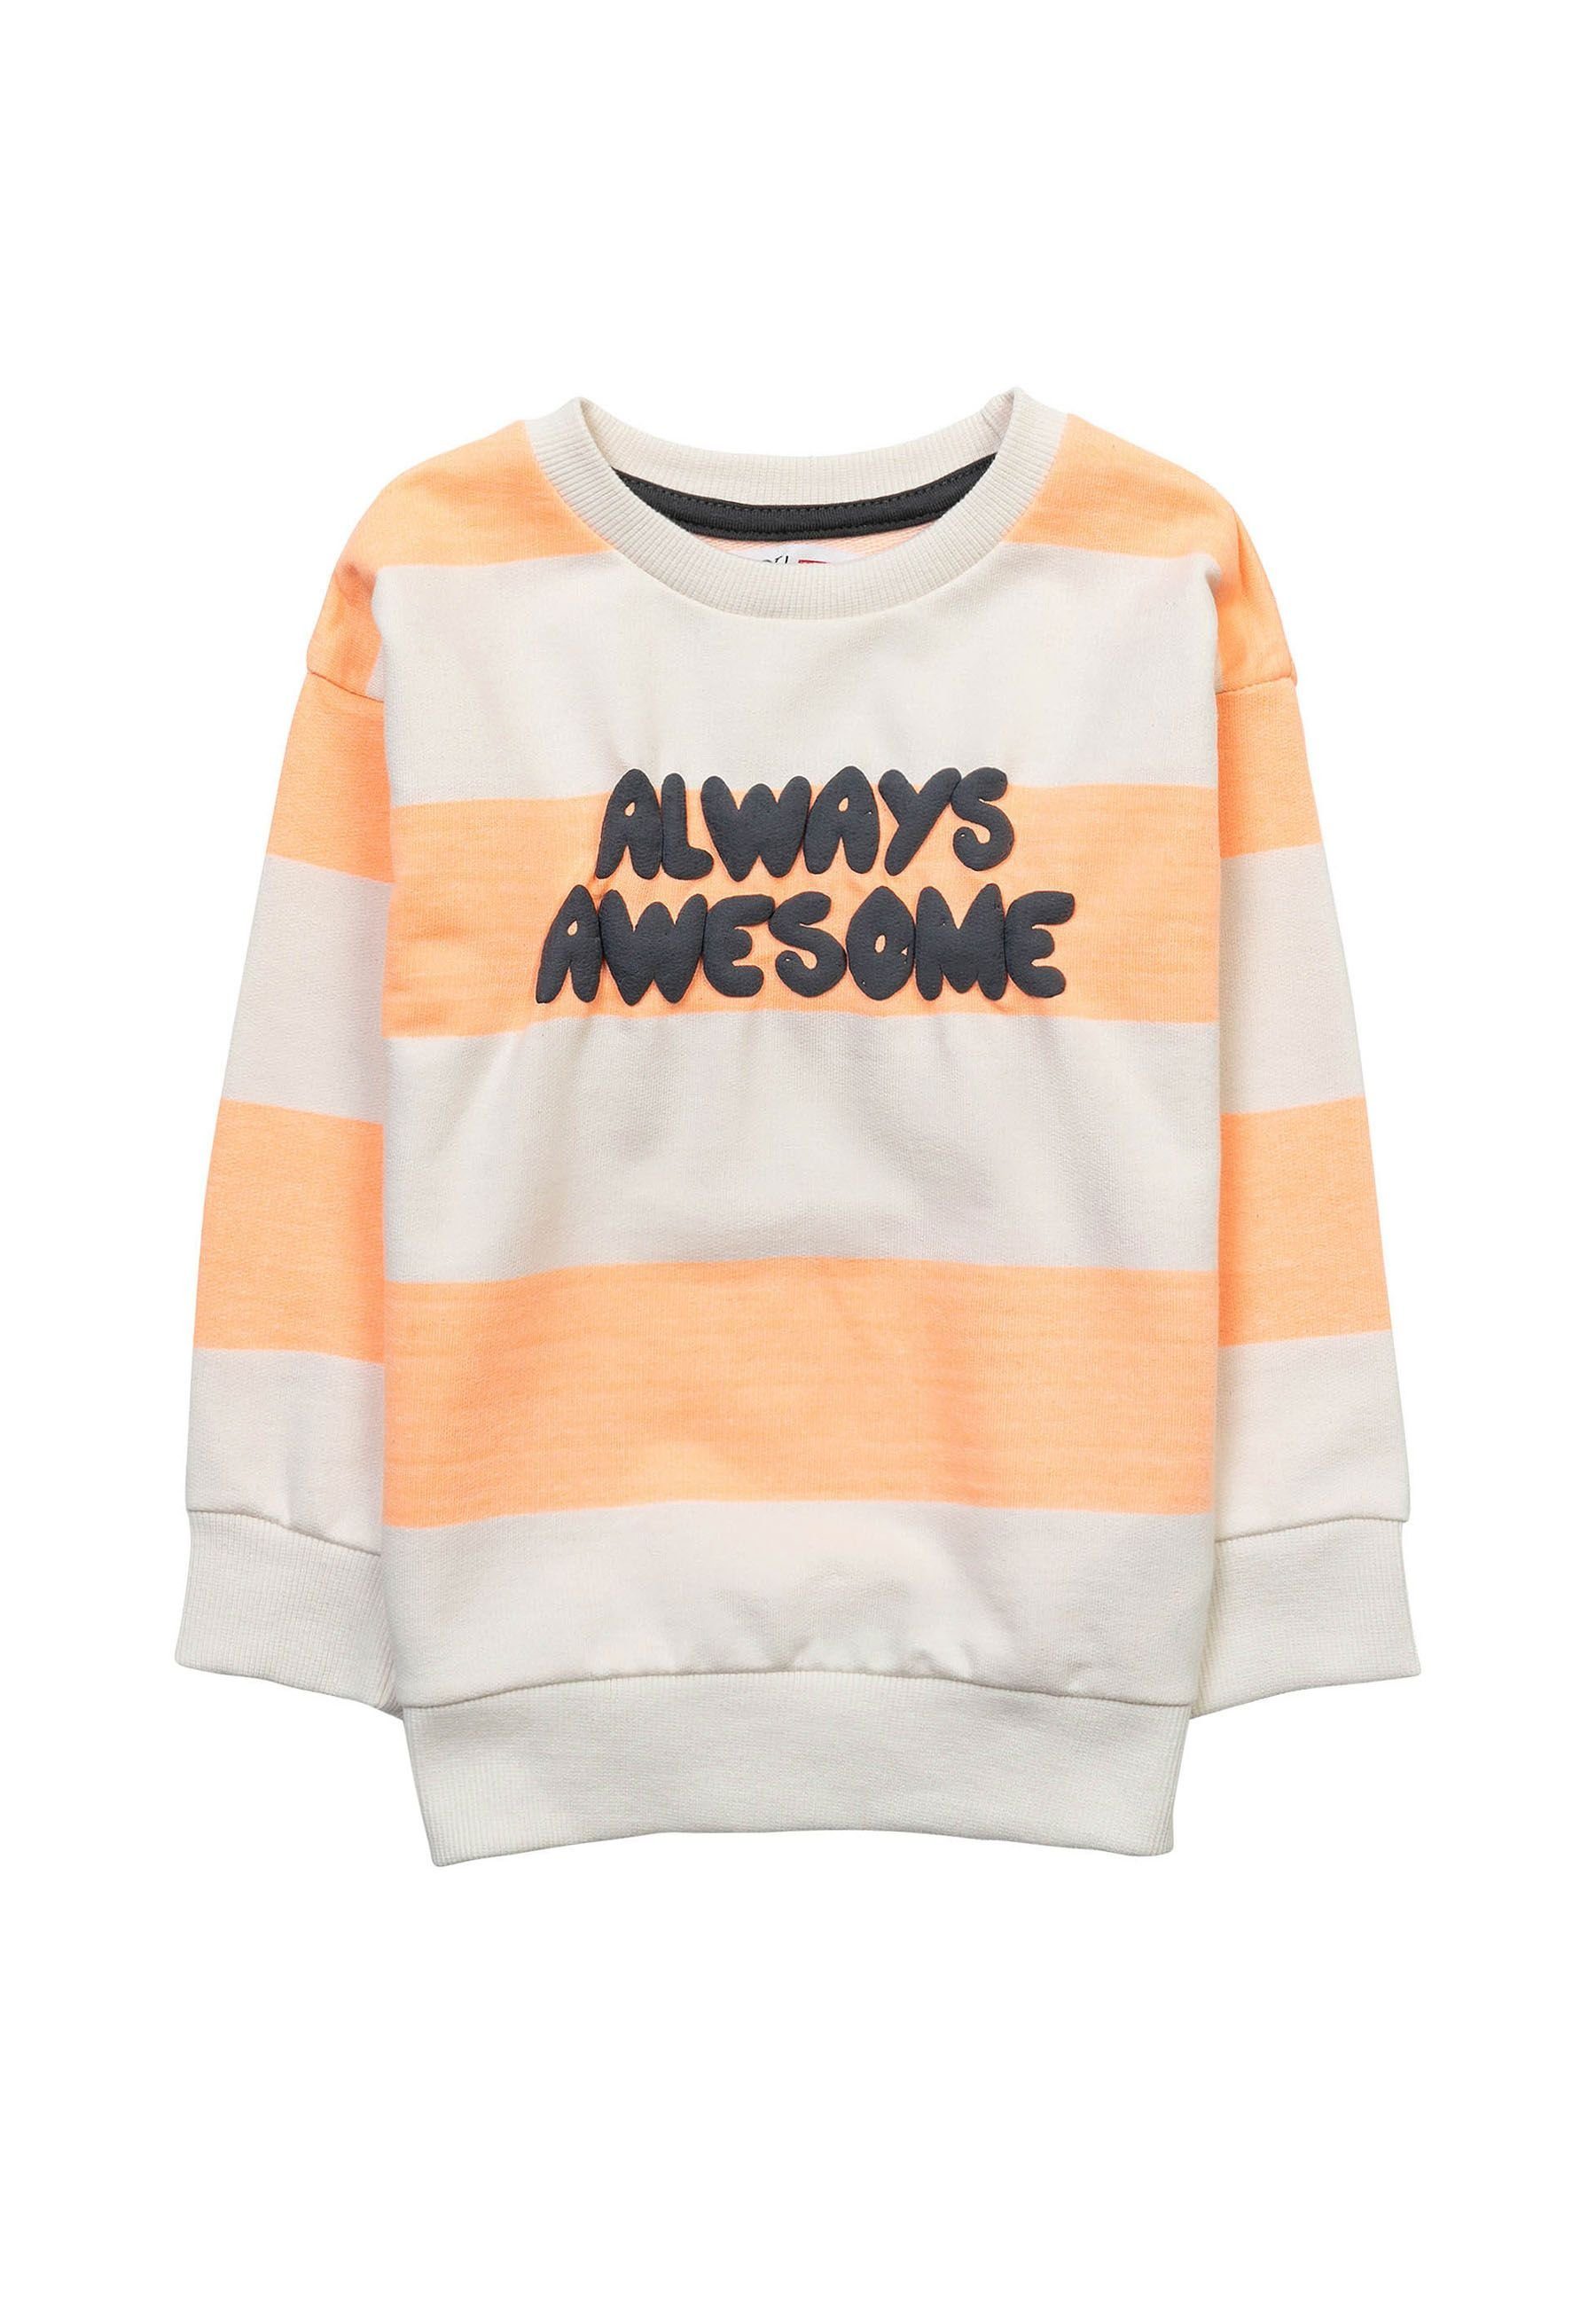 (1y-8y) MINOTI Sweatshirt Bequemes Orange Sweatshirt